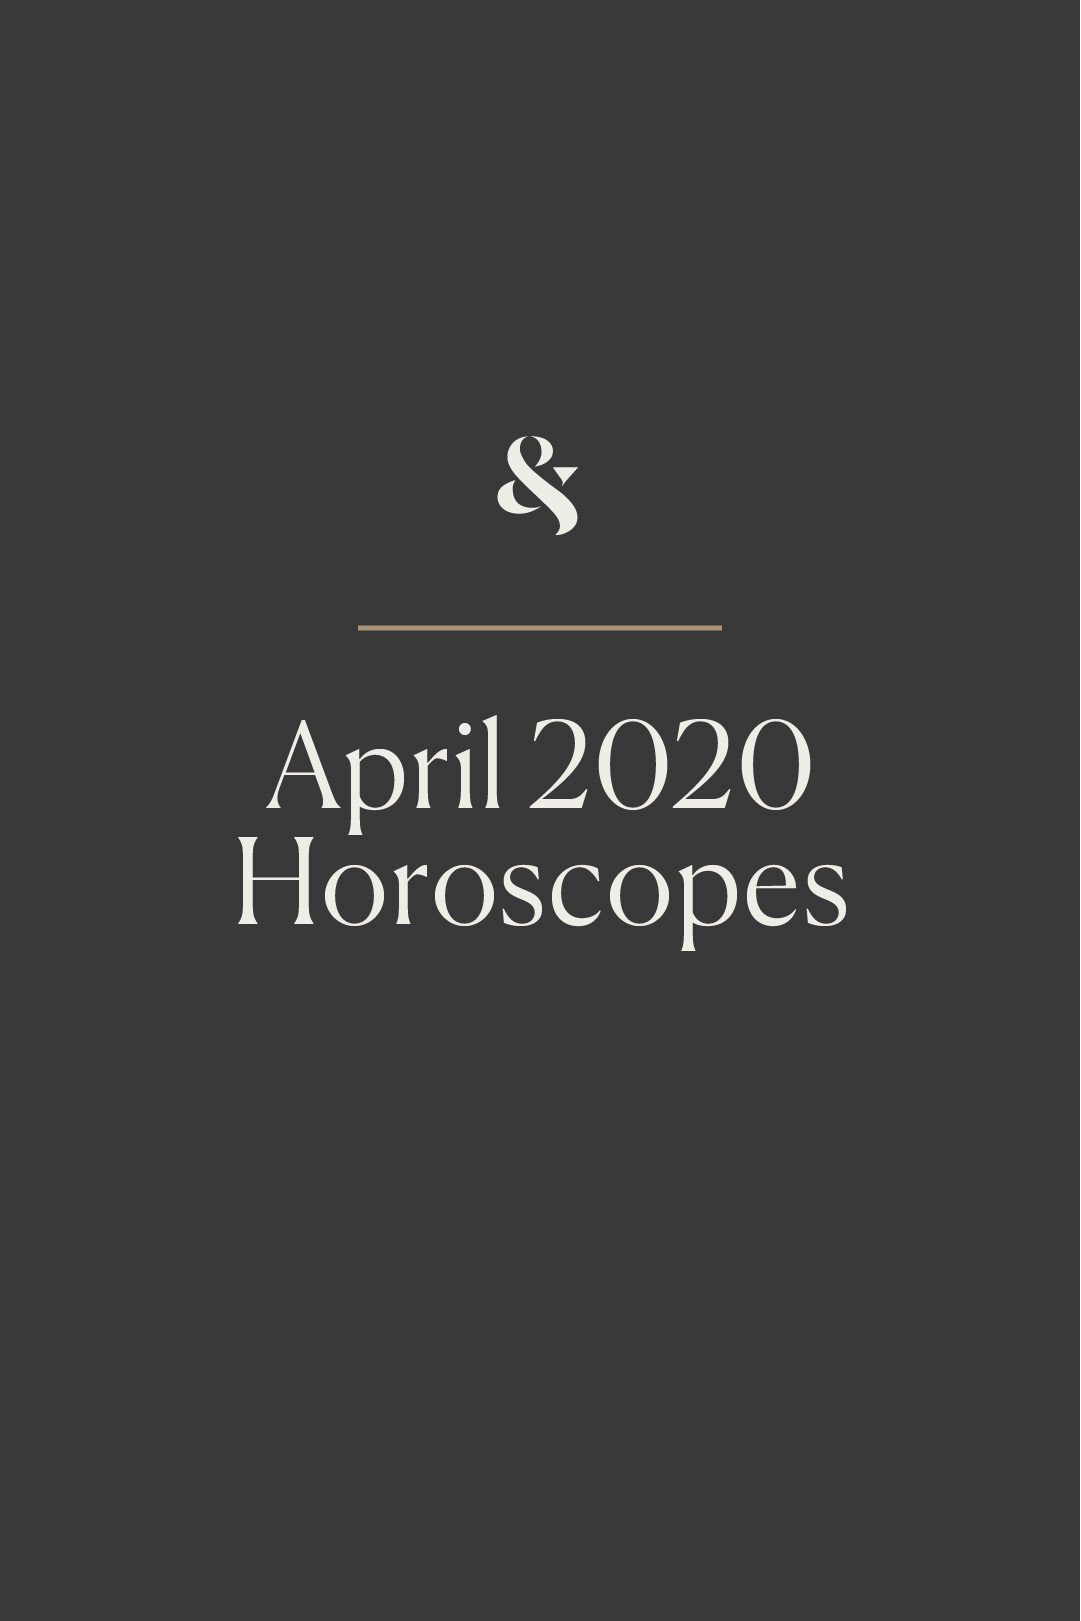 April 2020 Horoscopes